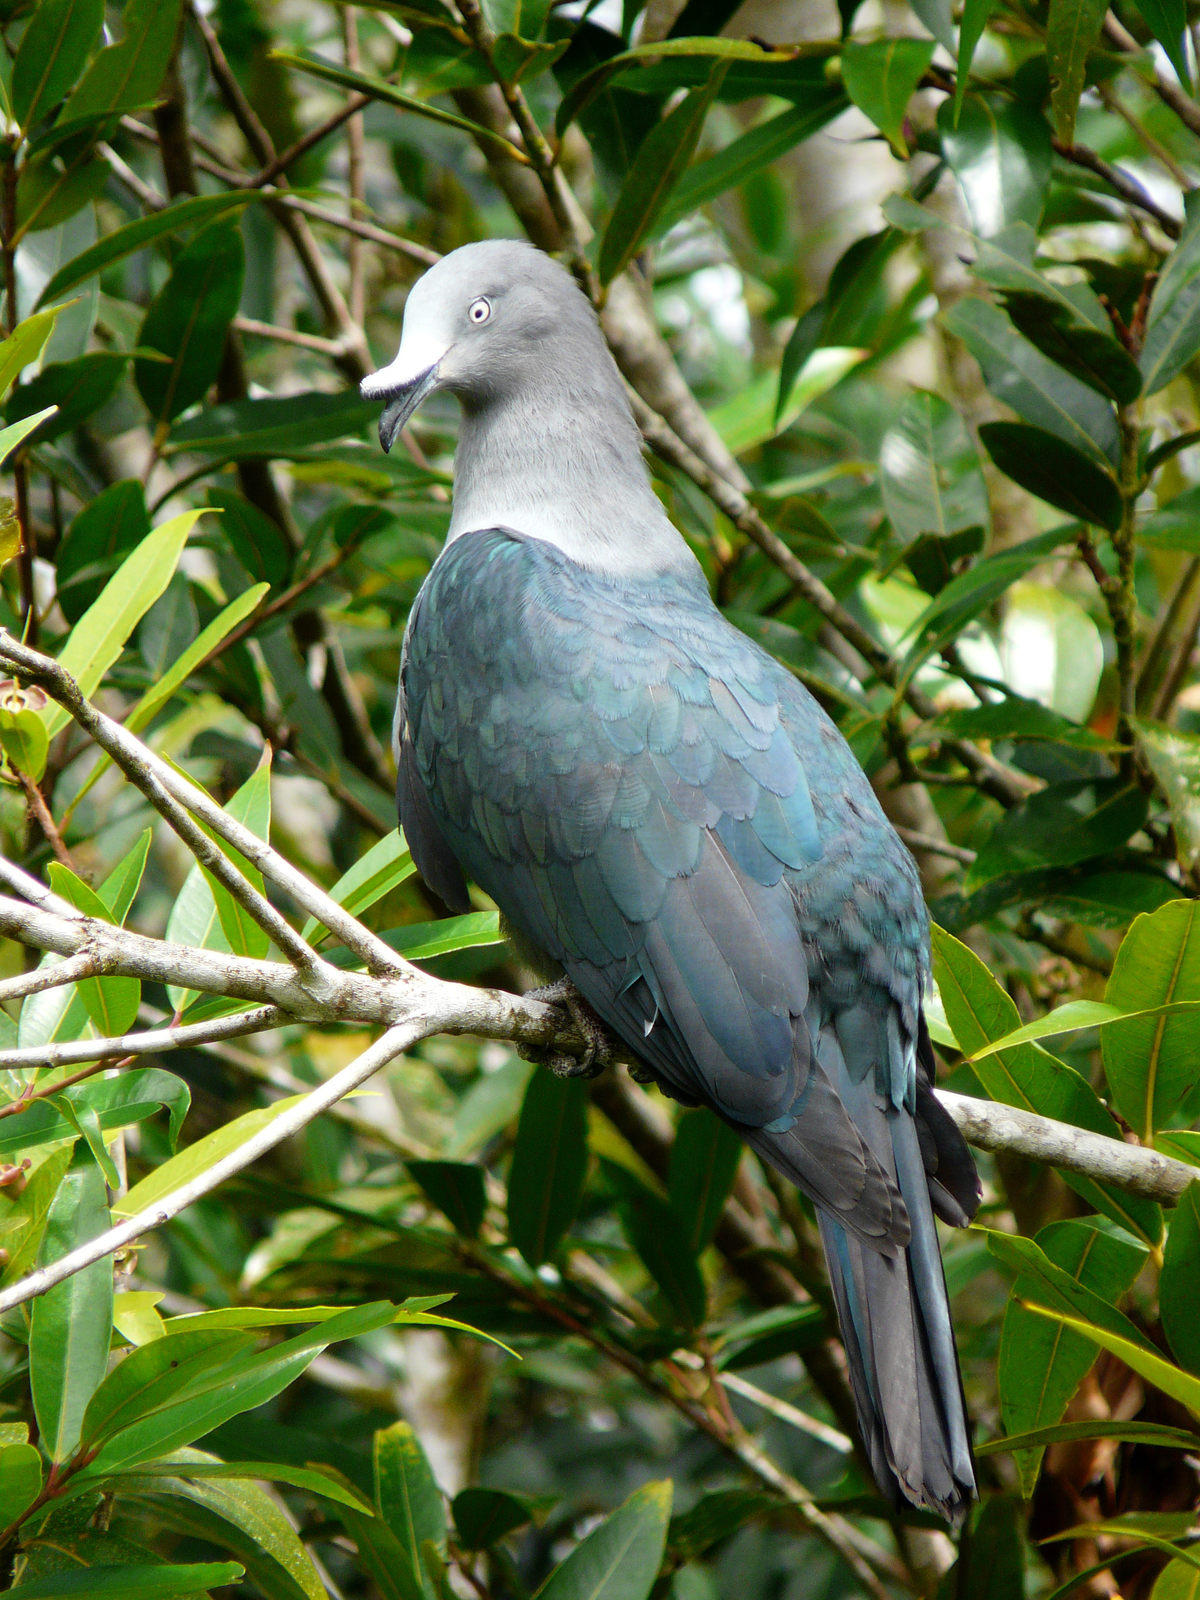 Marquesan imperial pigeon - Wikipedia